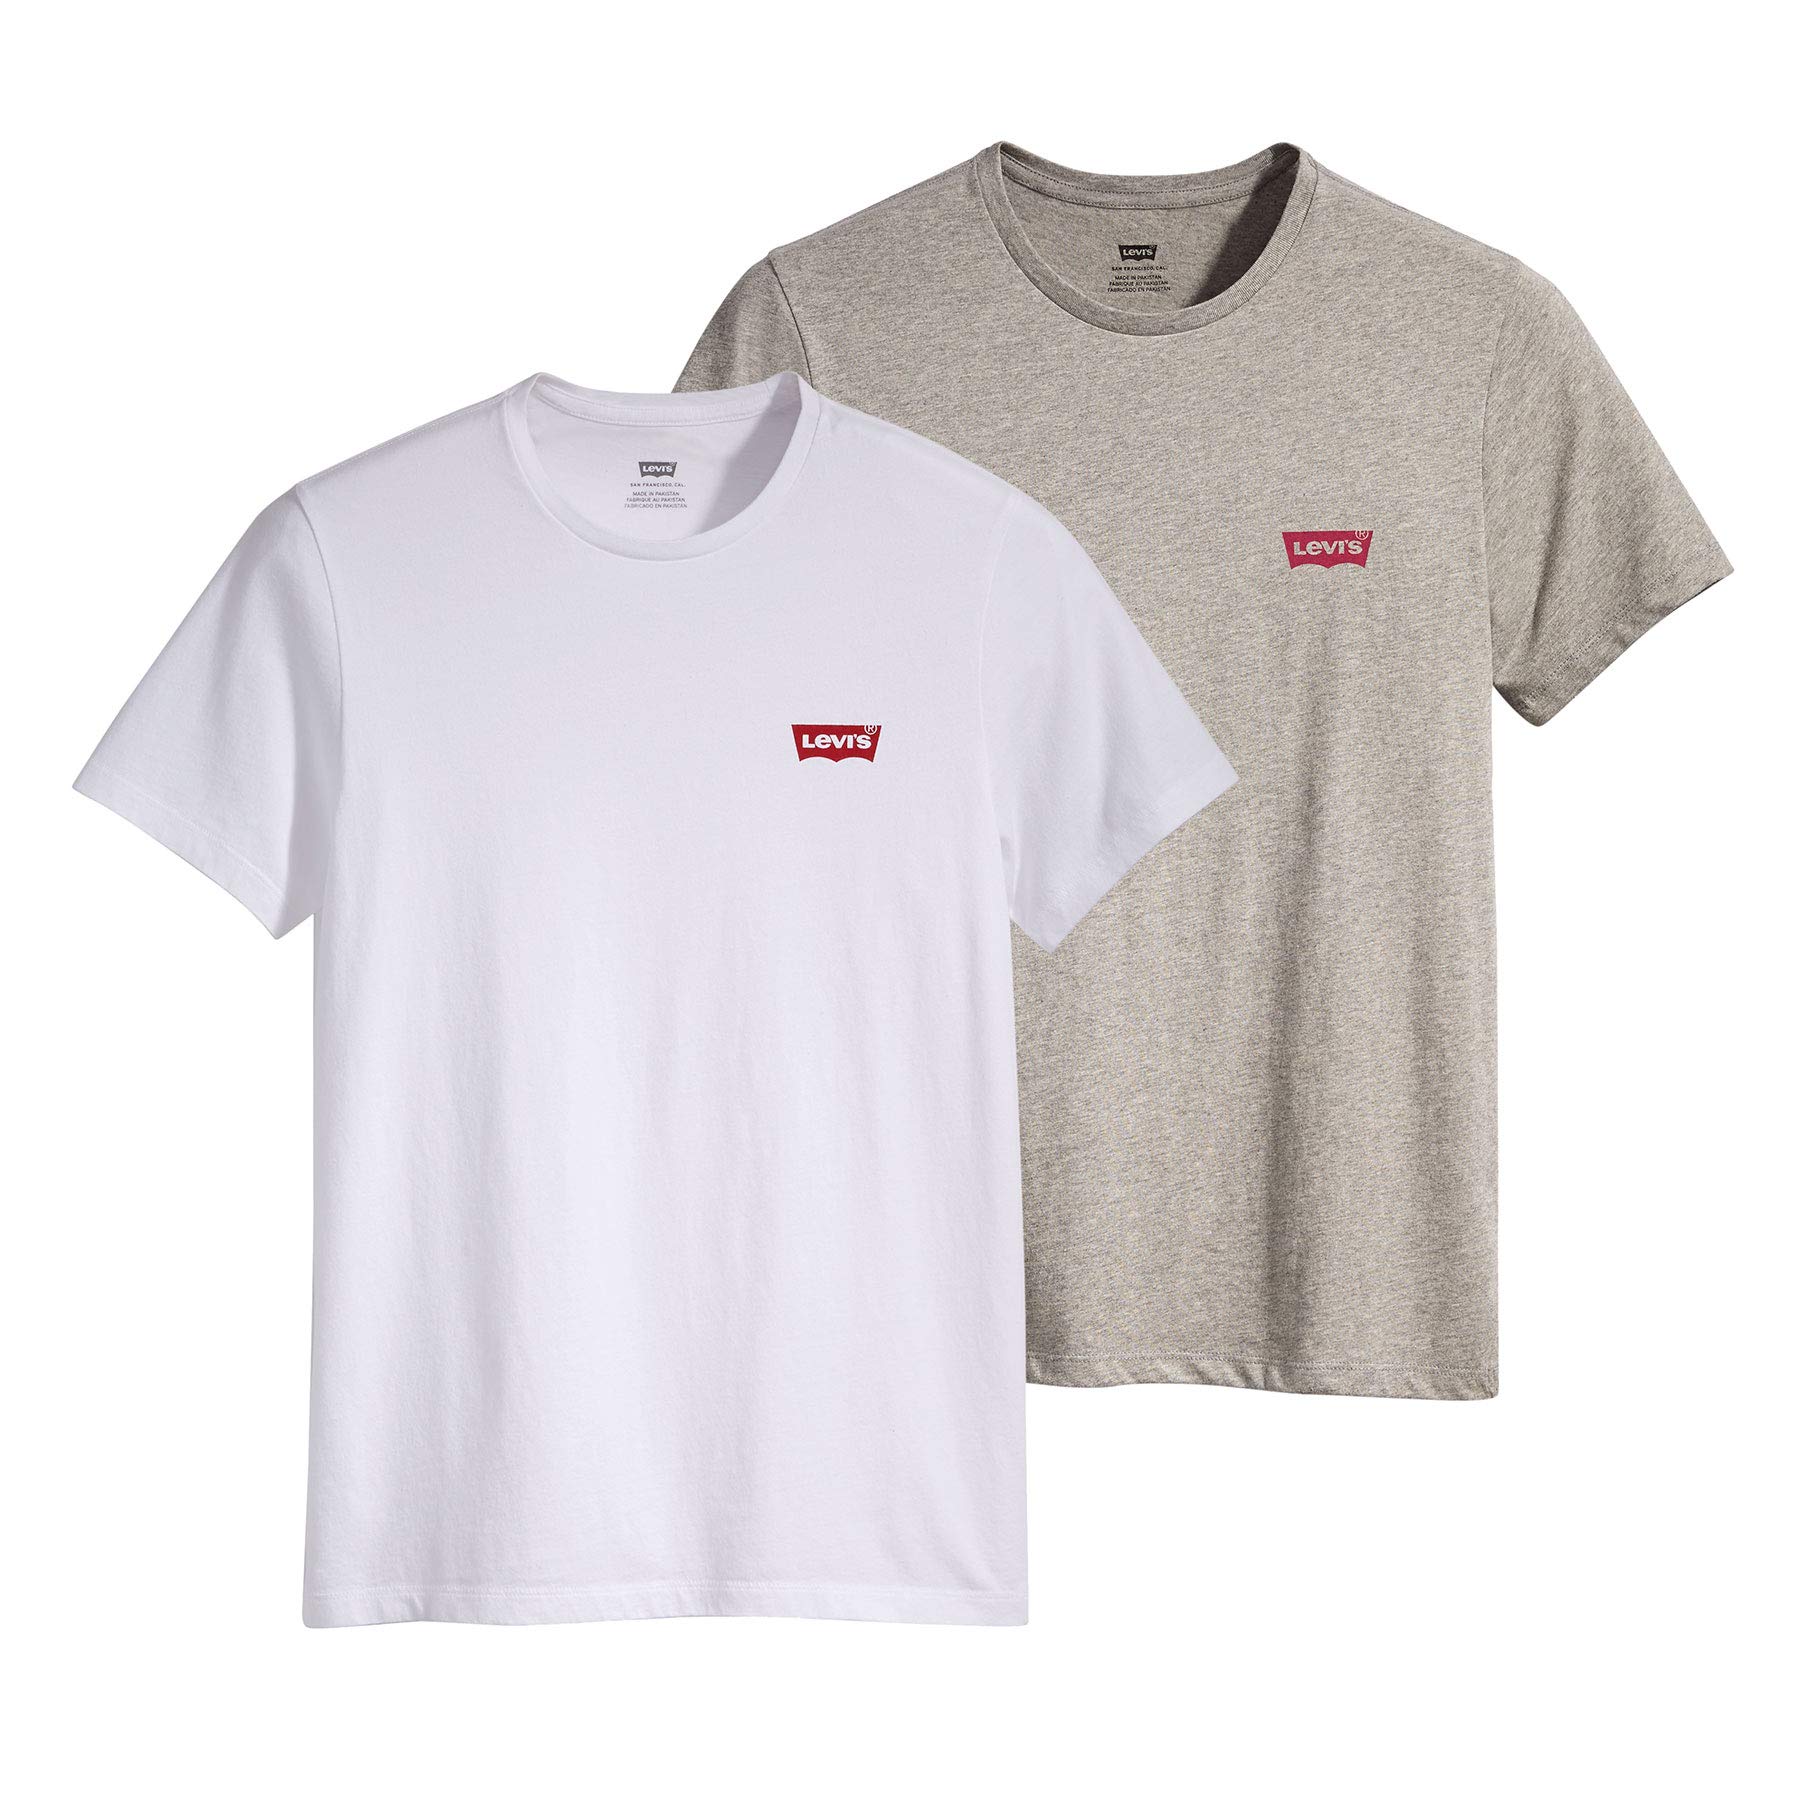 Levi's Herren 2-Pack Crewneck Graphic Tee T-Shirt, White / Mid Tone Grey Heather, L